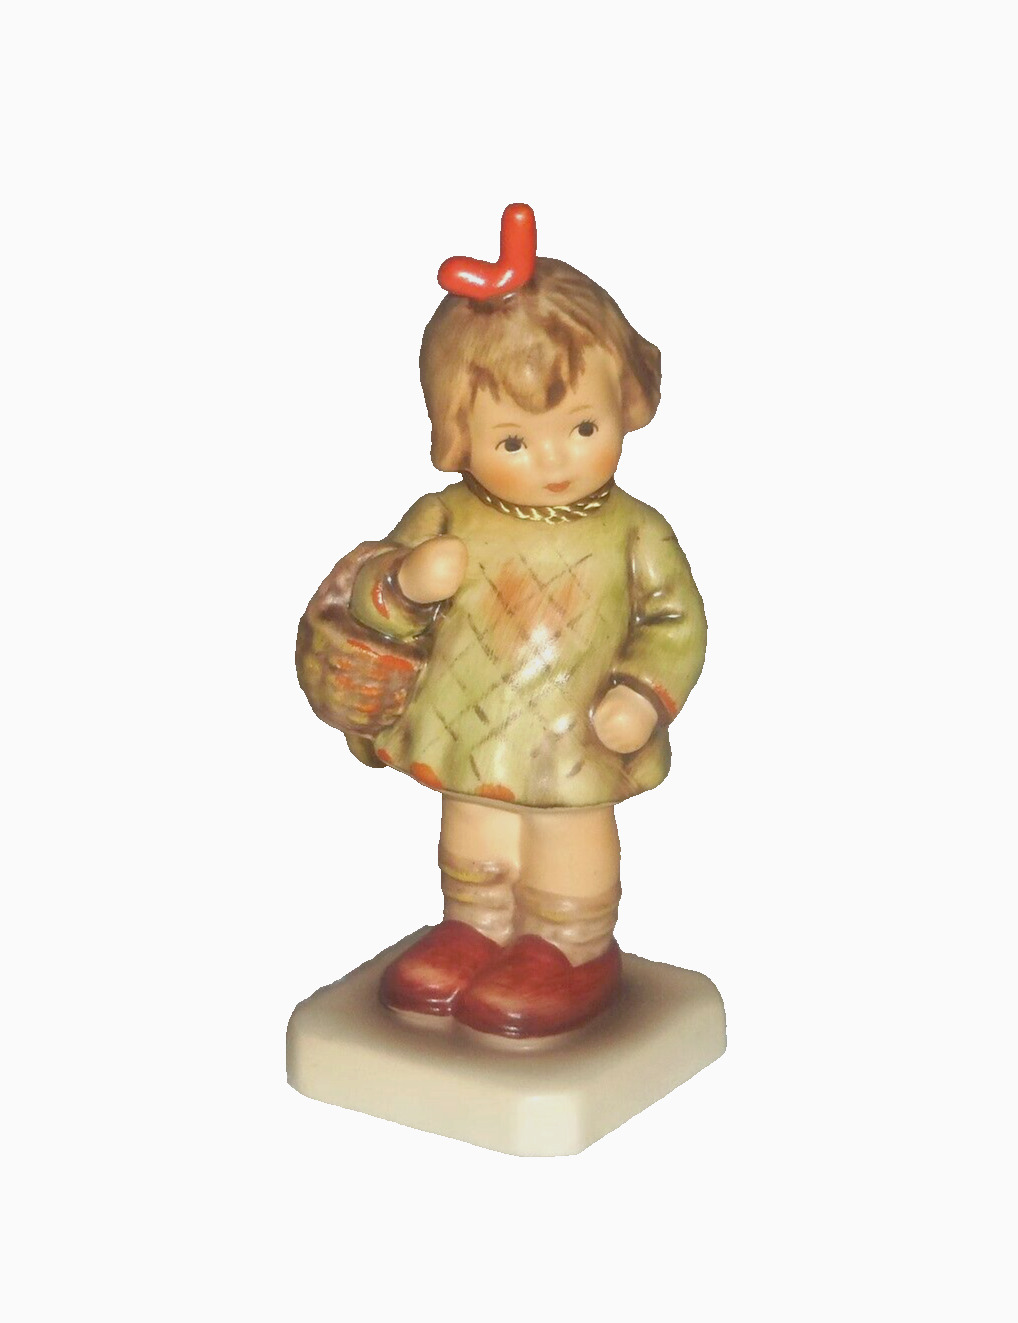 Goebel M. I. Hummel Club Girl Basket I Brought You a Gift Figurine #479 1995/96